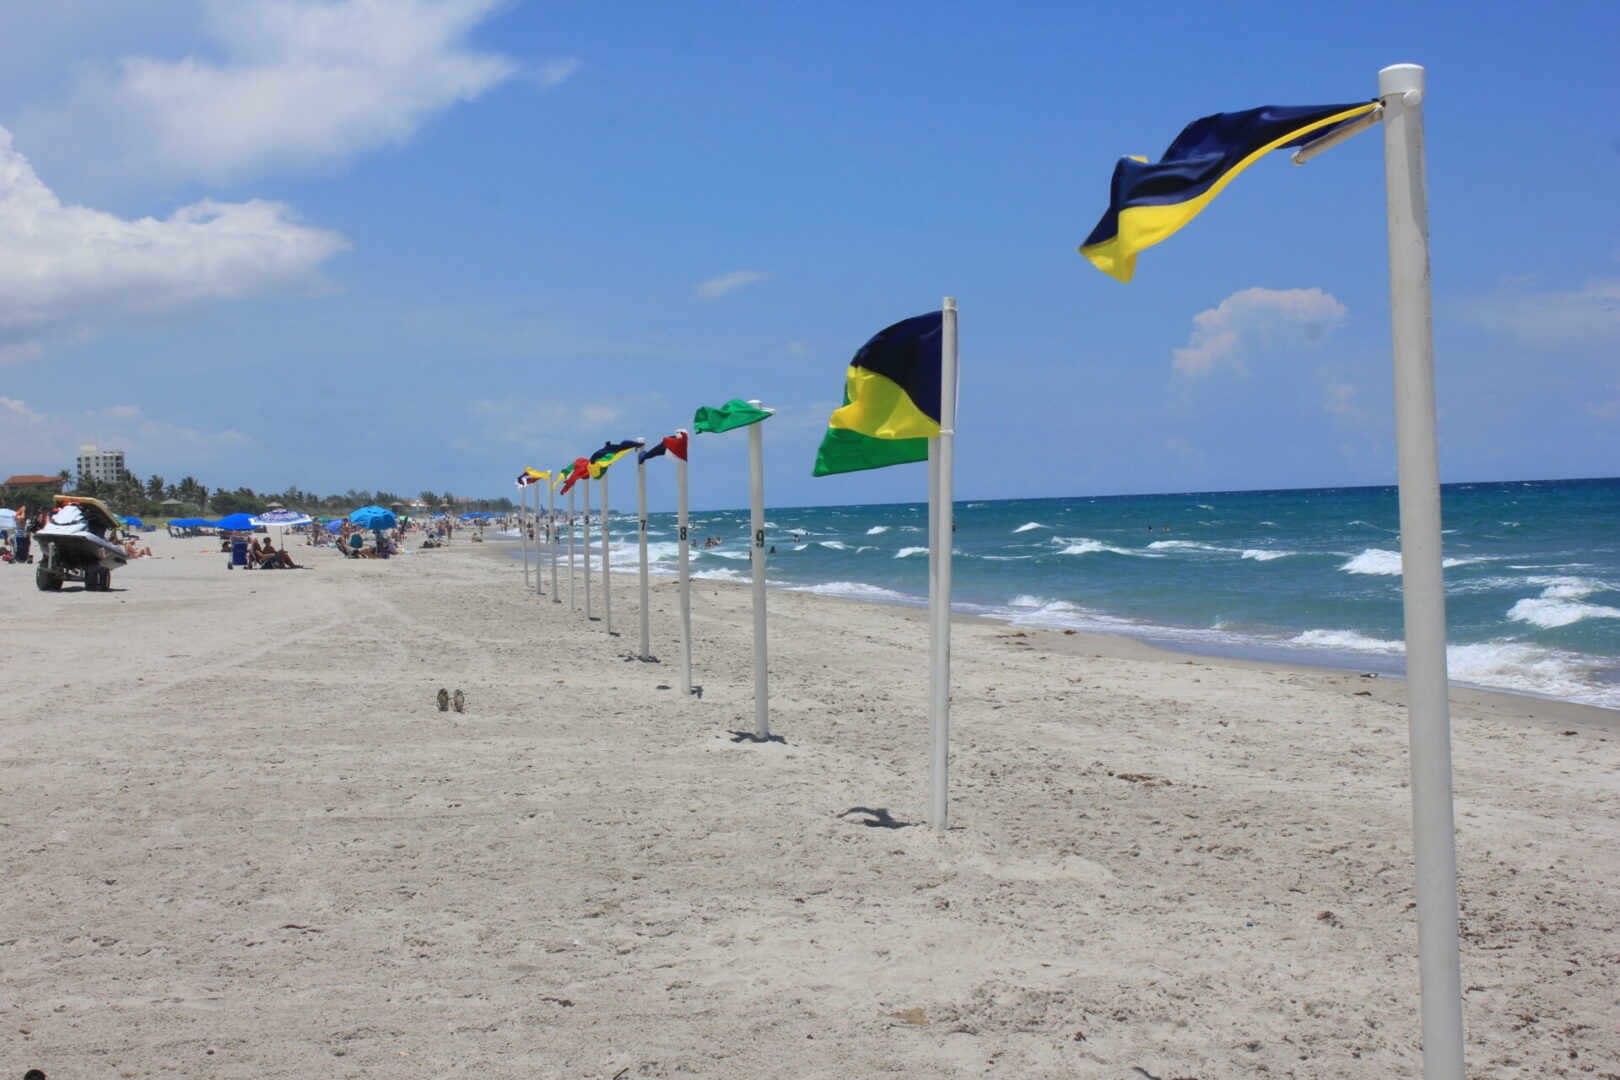 A row of flags on the beach near water.